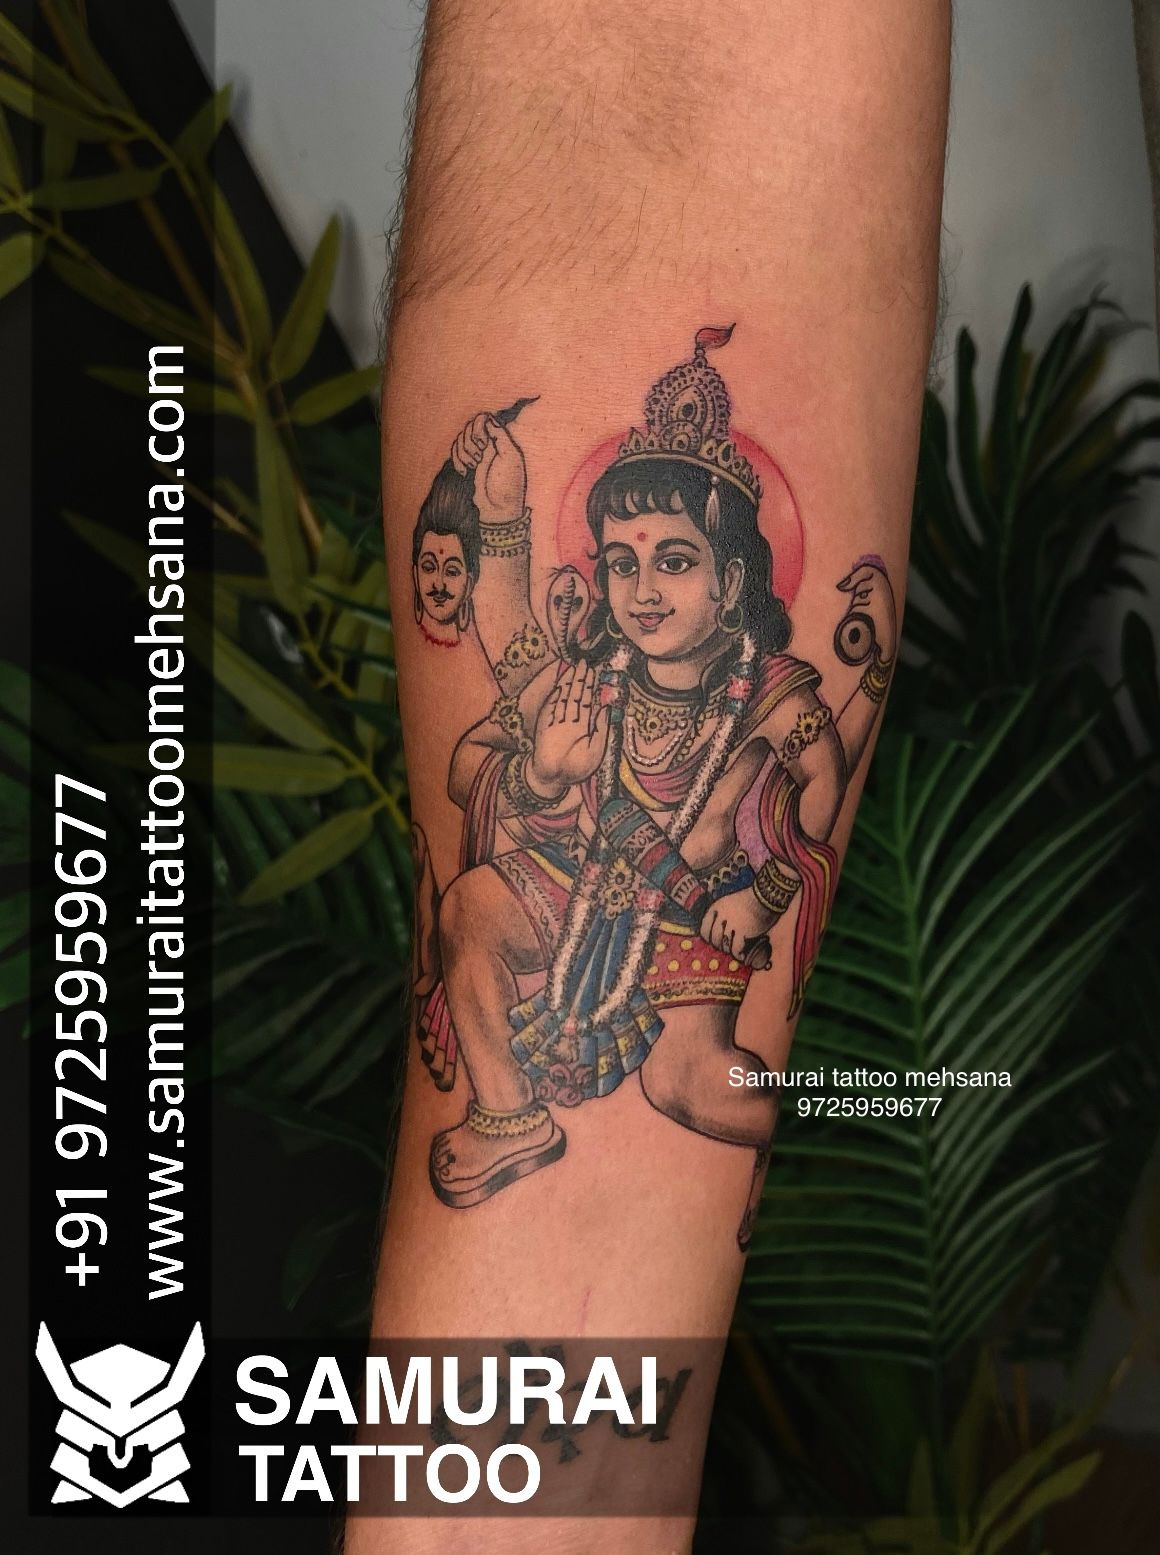 Ra-zone Tattoo - Kaal Bhairav 👹 Done with @blackmagic.ink Artist :  @ra_razone - - - #art #artist #tattoo #tattooart #tattooartist #razone  #razonetattoo #storiesinskin #tattooartistinkathmandu  #tattoostudioinkathmandu #blackandgreytattoo #blackart ...